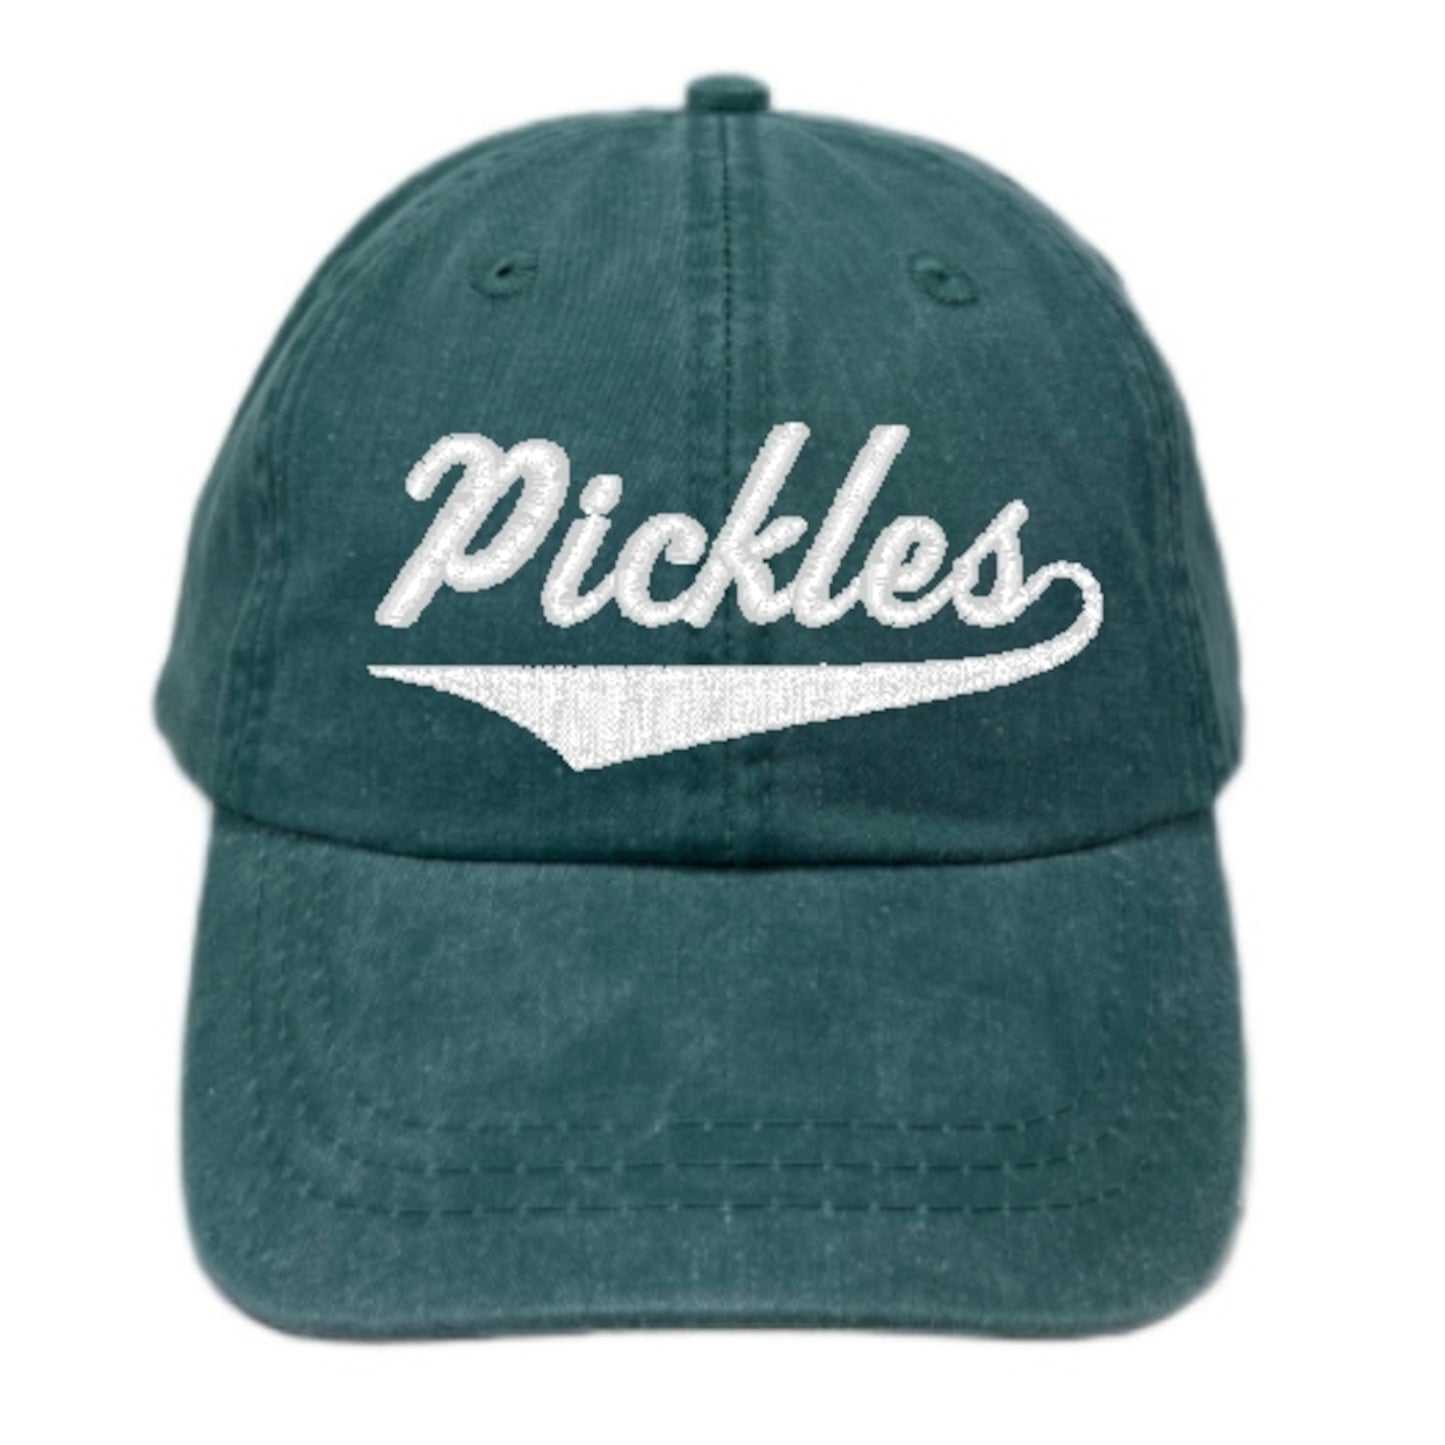 Team Pickles Dad Hat, Baseball Cap, Athletic Font